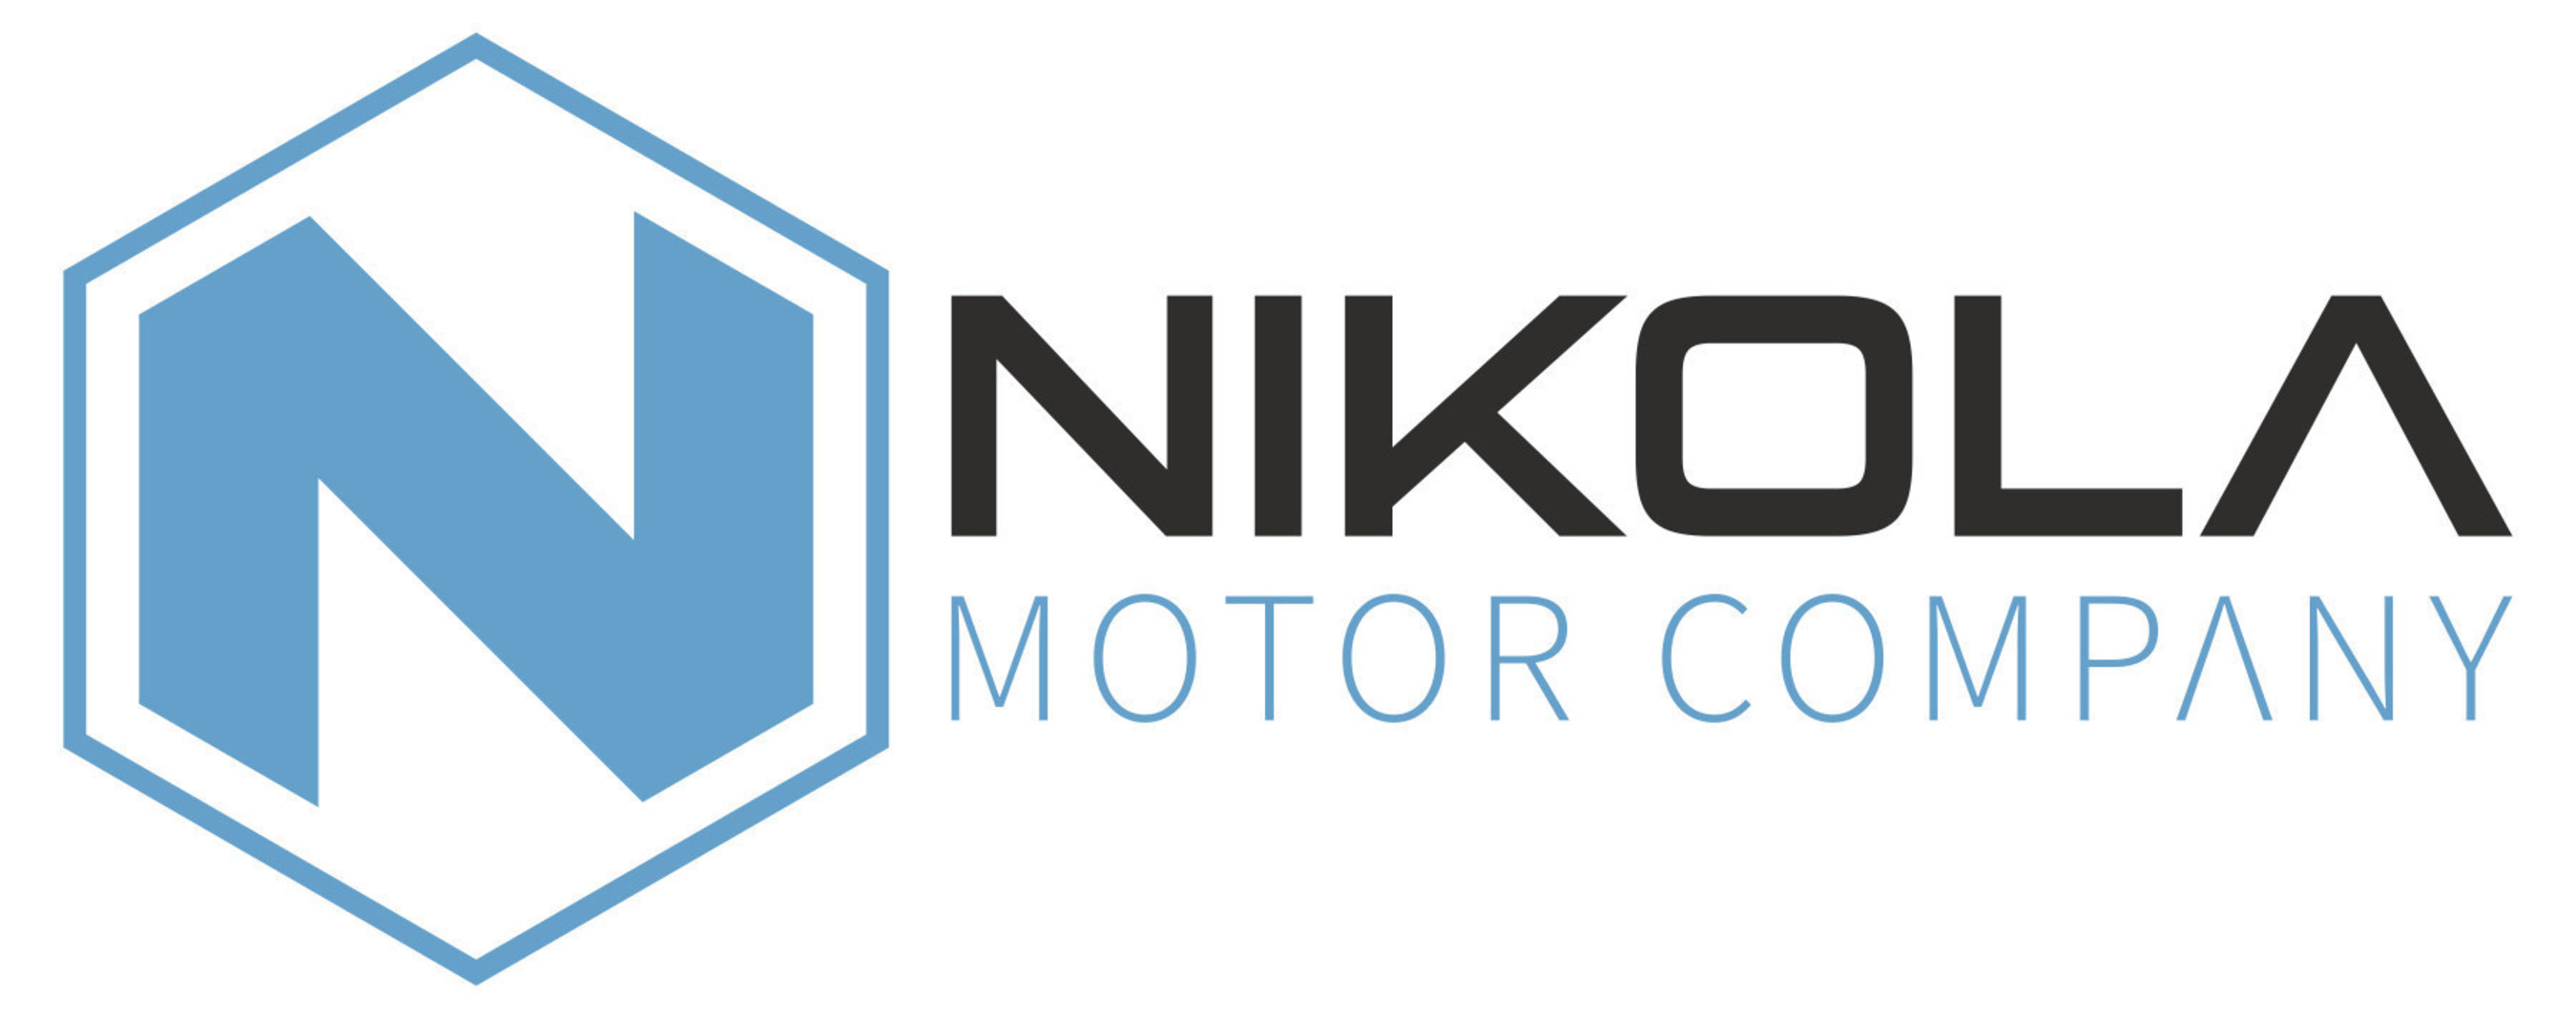 Nikola Motor Company Generates $2.3 Billion in Pre-Sales in First Month